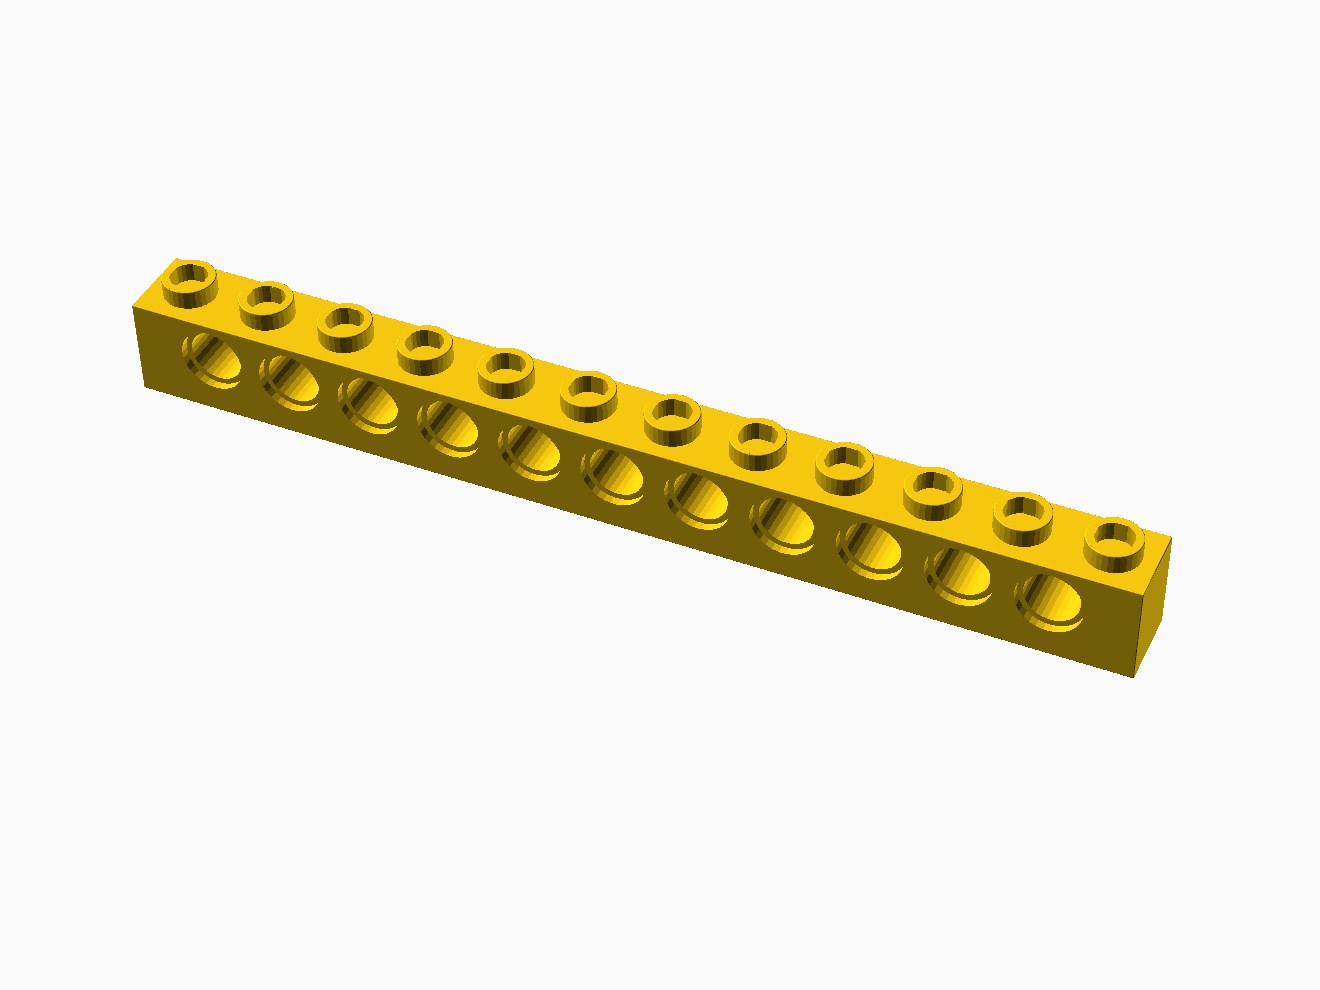 3D printable model of a LEGO Technic 12x1 Brick.